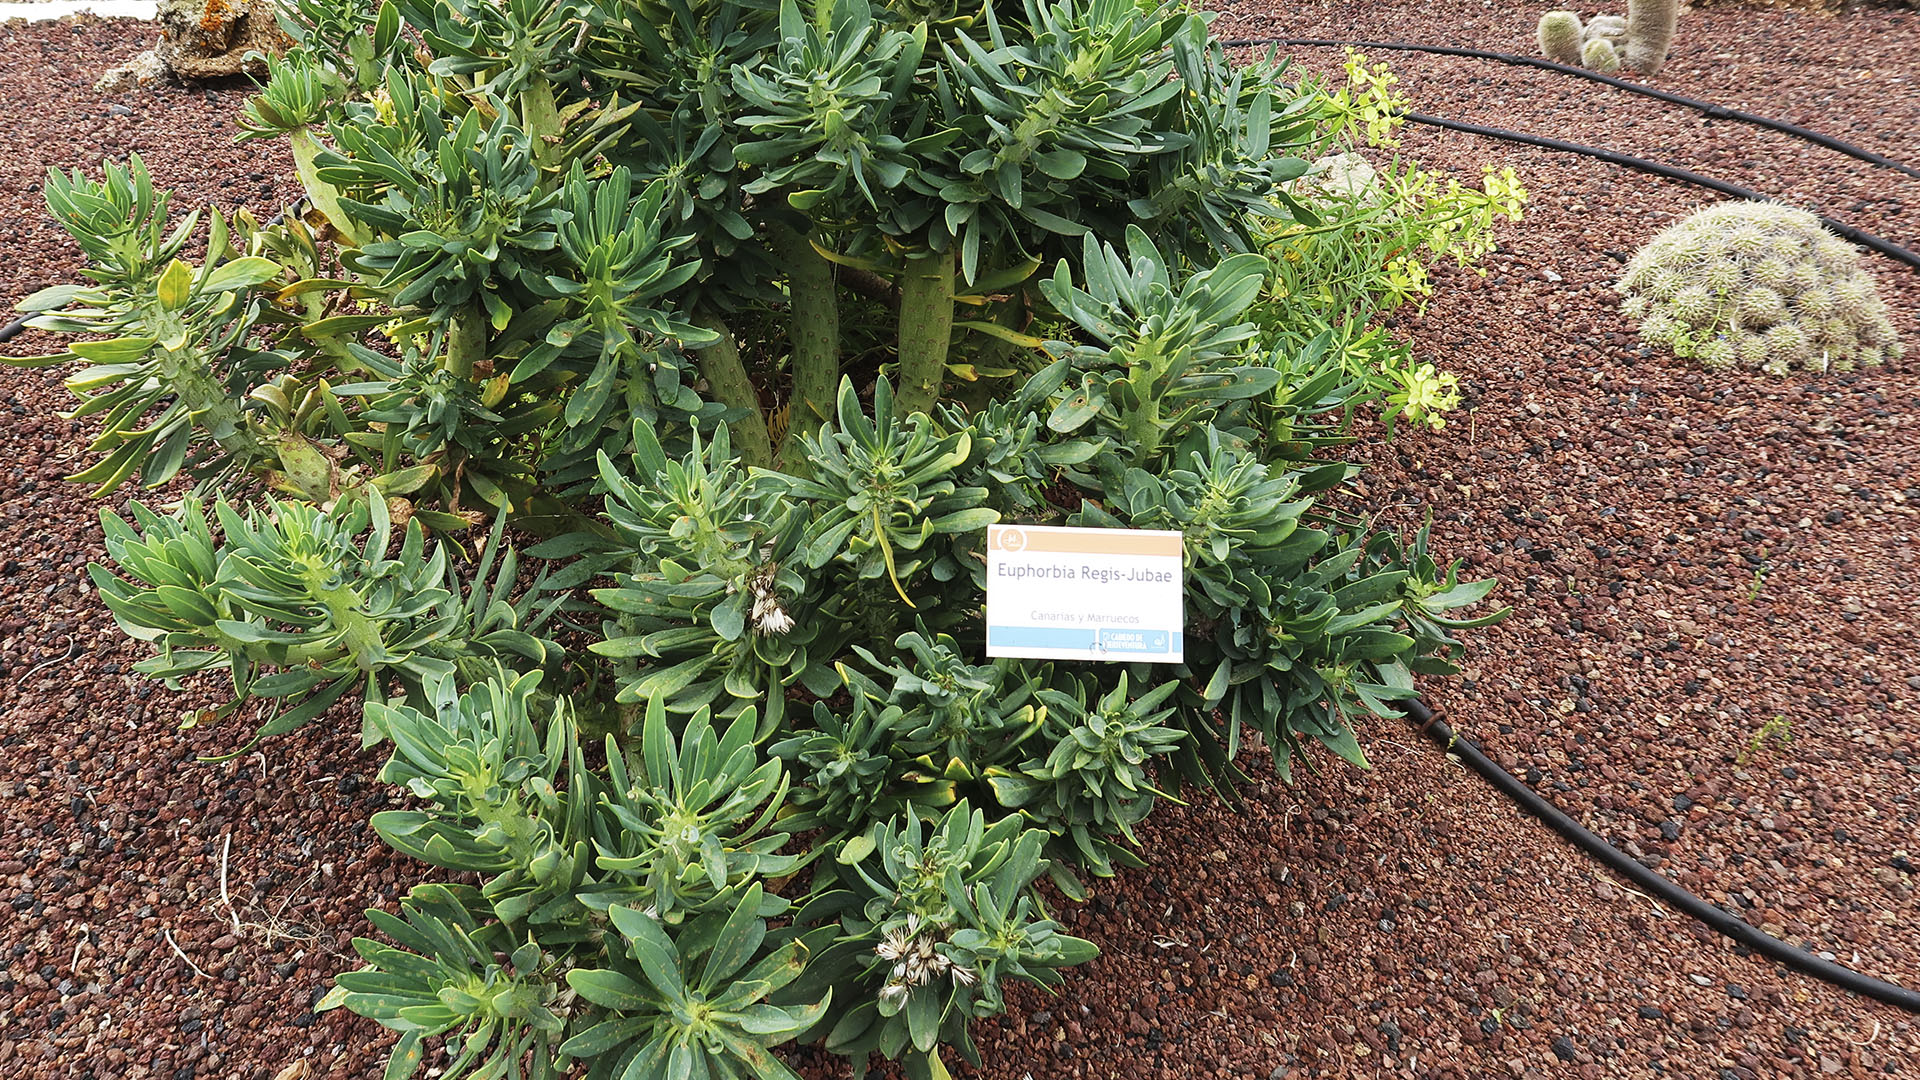 König Juba Wolfsmilch – Euphorbia regis jubae.